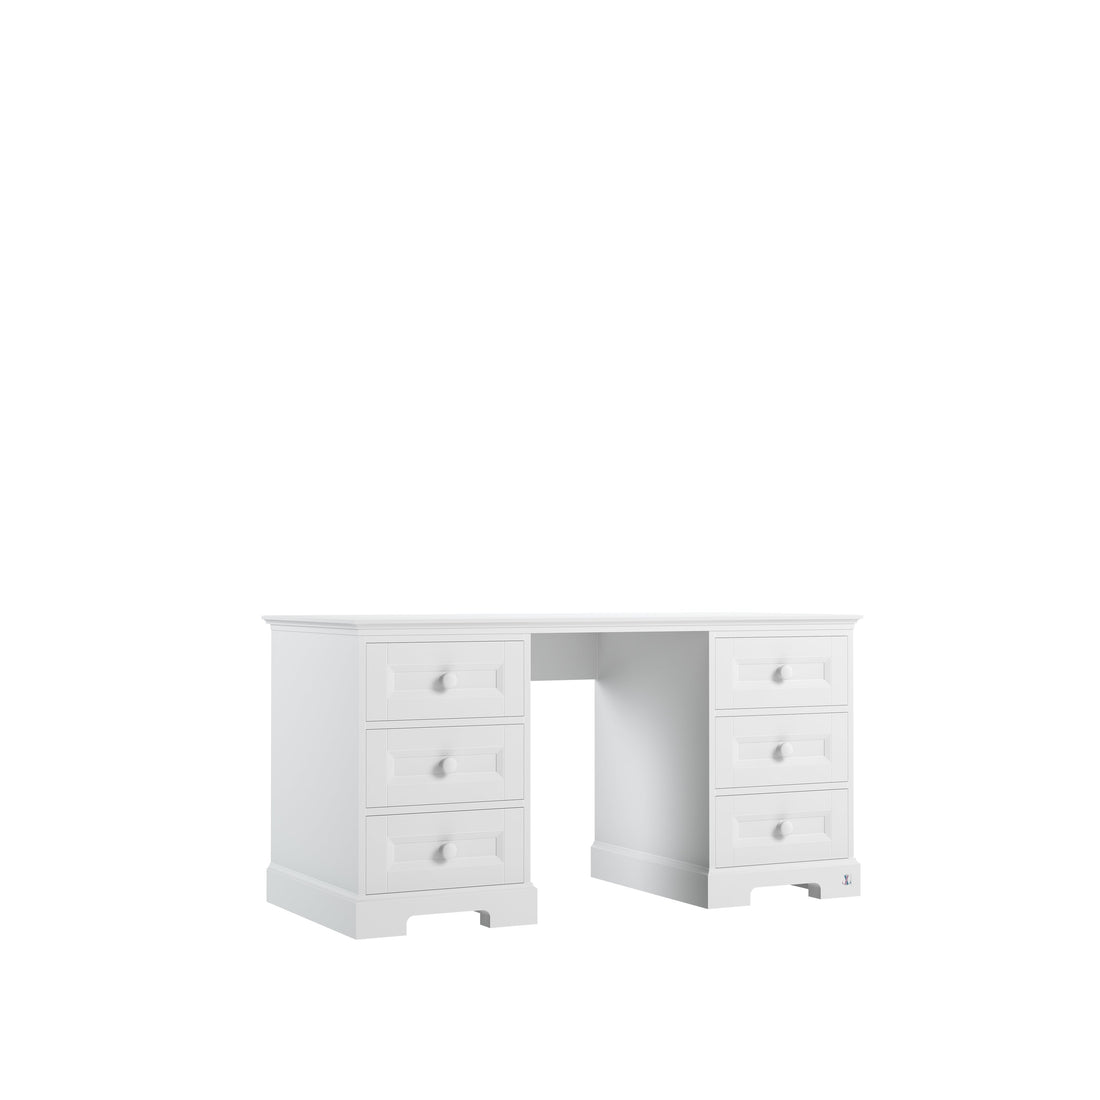 Large desk ROYAL with 6 drawes | Classic desk for children | Luxury children furniture | manufacturer luxury furniture